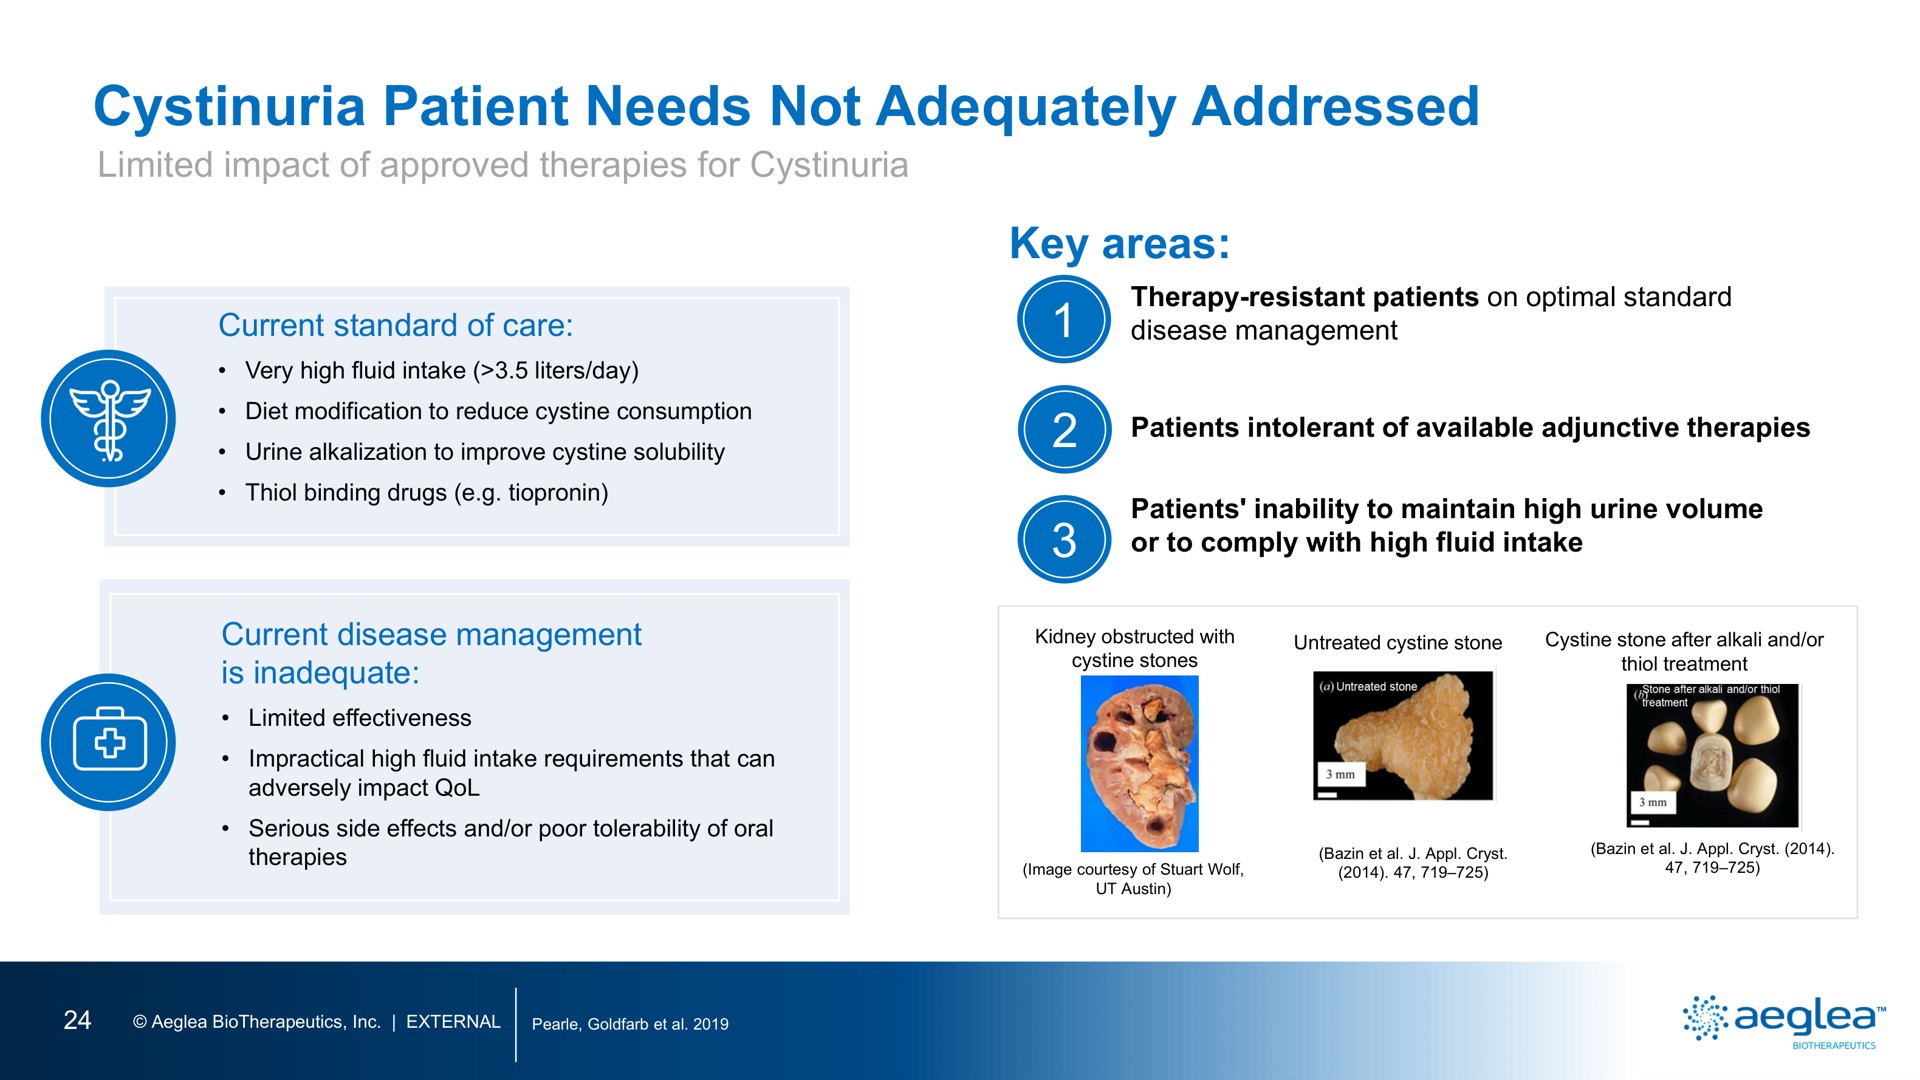 cystinuria patient needs not adequately addressed | Aeglea BioTherapeutics